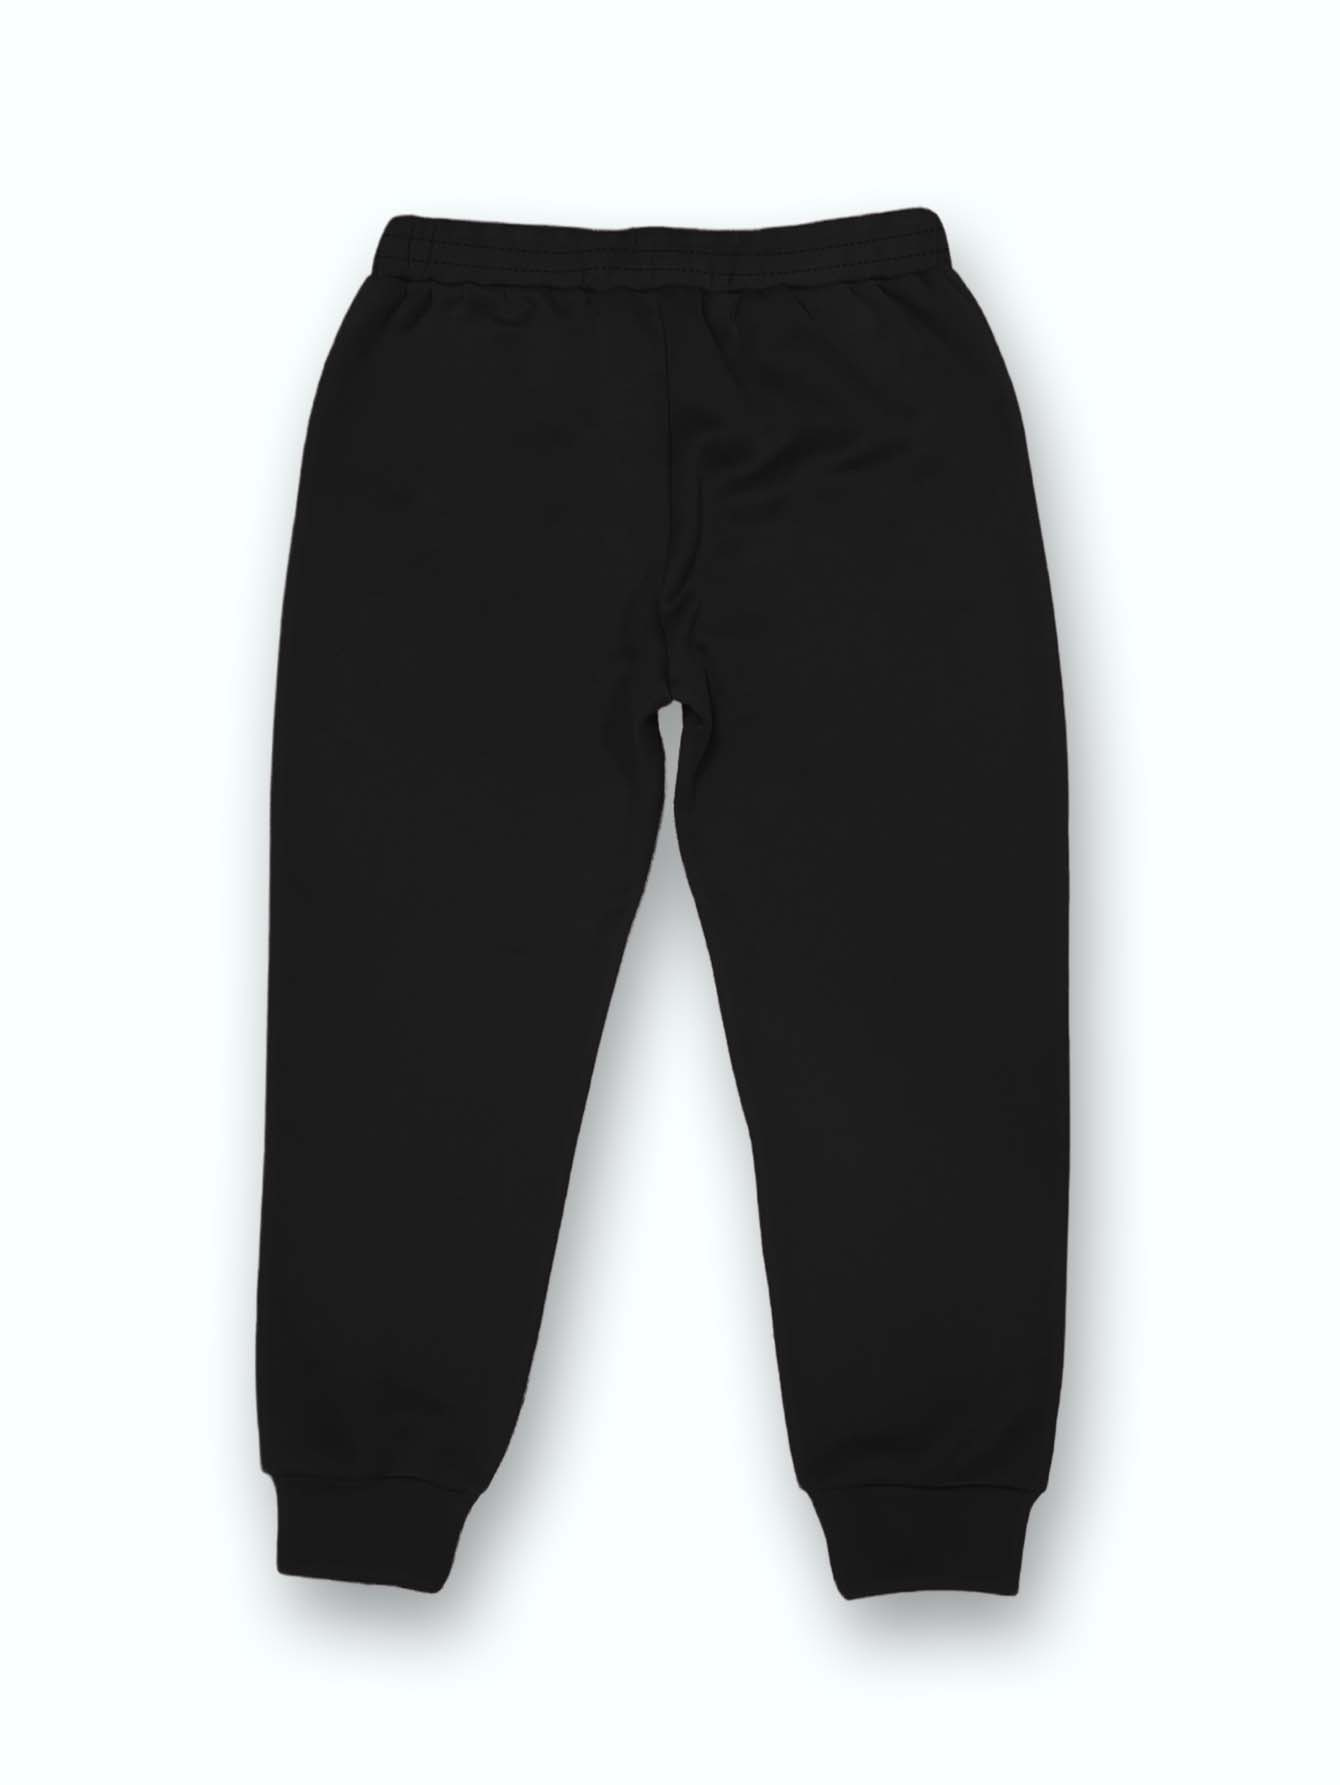 Black Sweatshirt with Black Sweatpants Outfits For Men (13 ideas